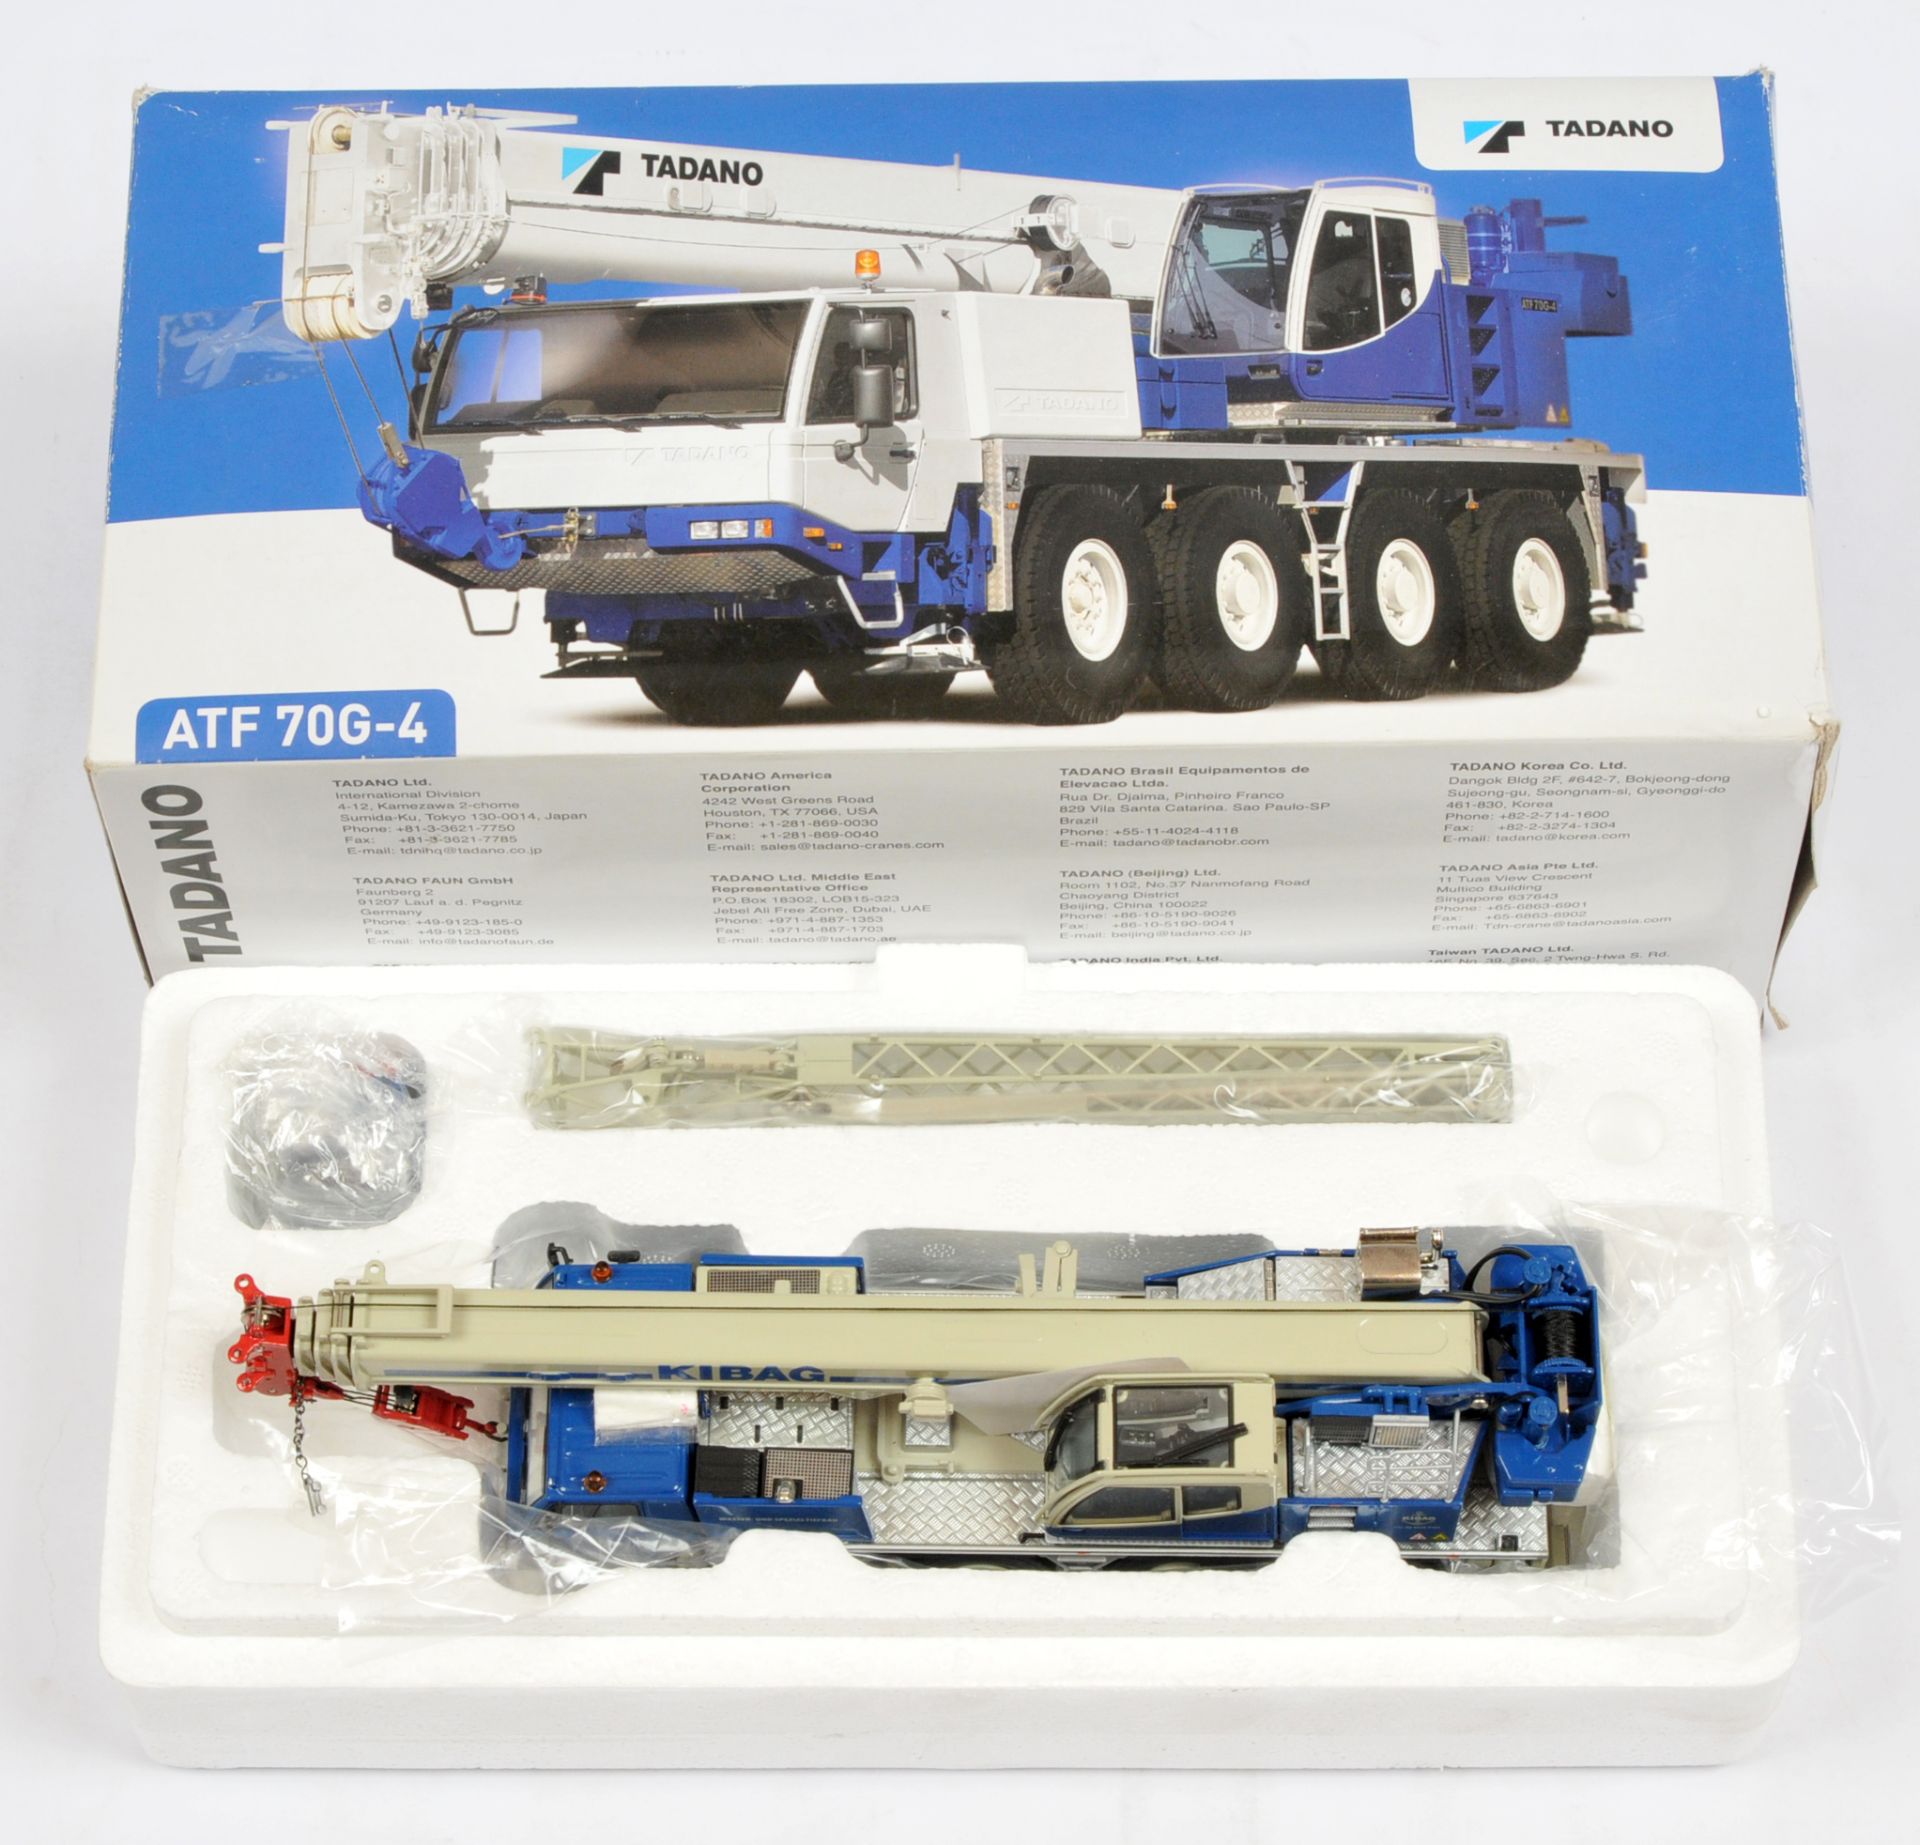 WSI Models (1/50th) 01-1436 Tadano ATF 70G-4 "Kibag" Mobile Crane - Light grey and blue - Mint in...